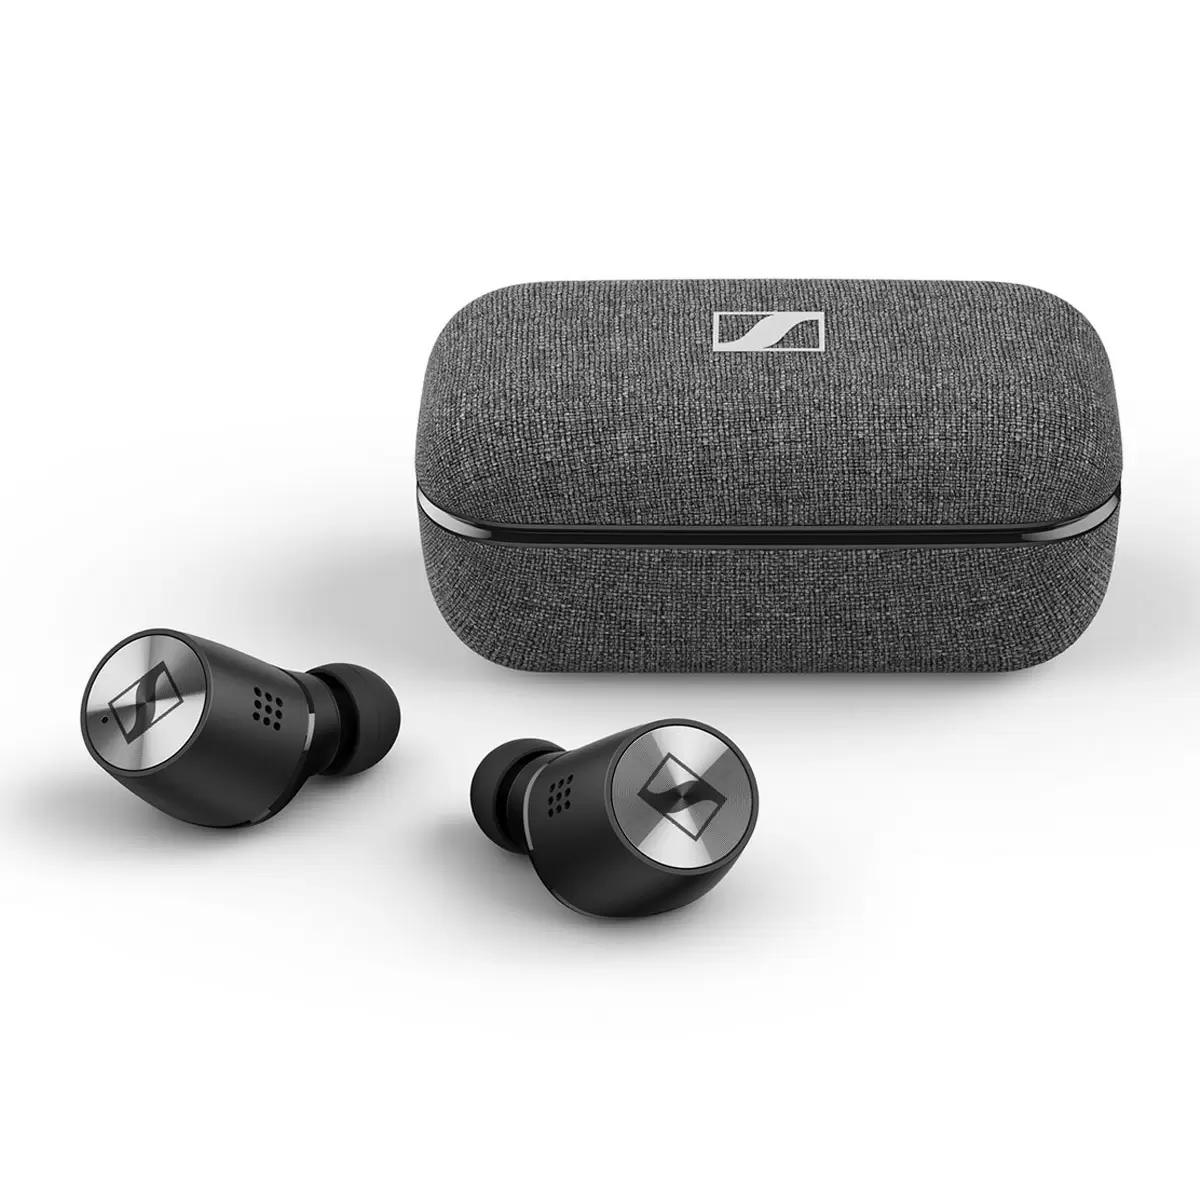 Sennheiser Momentum True Wireless 2 Bluetooth Earbuds for $199.95 Shipped